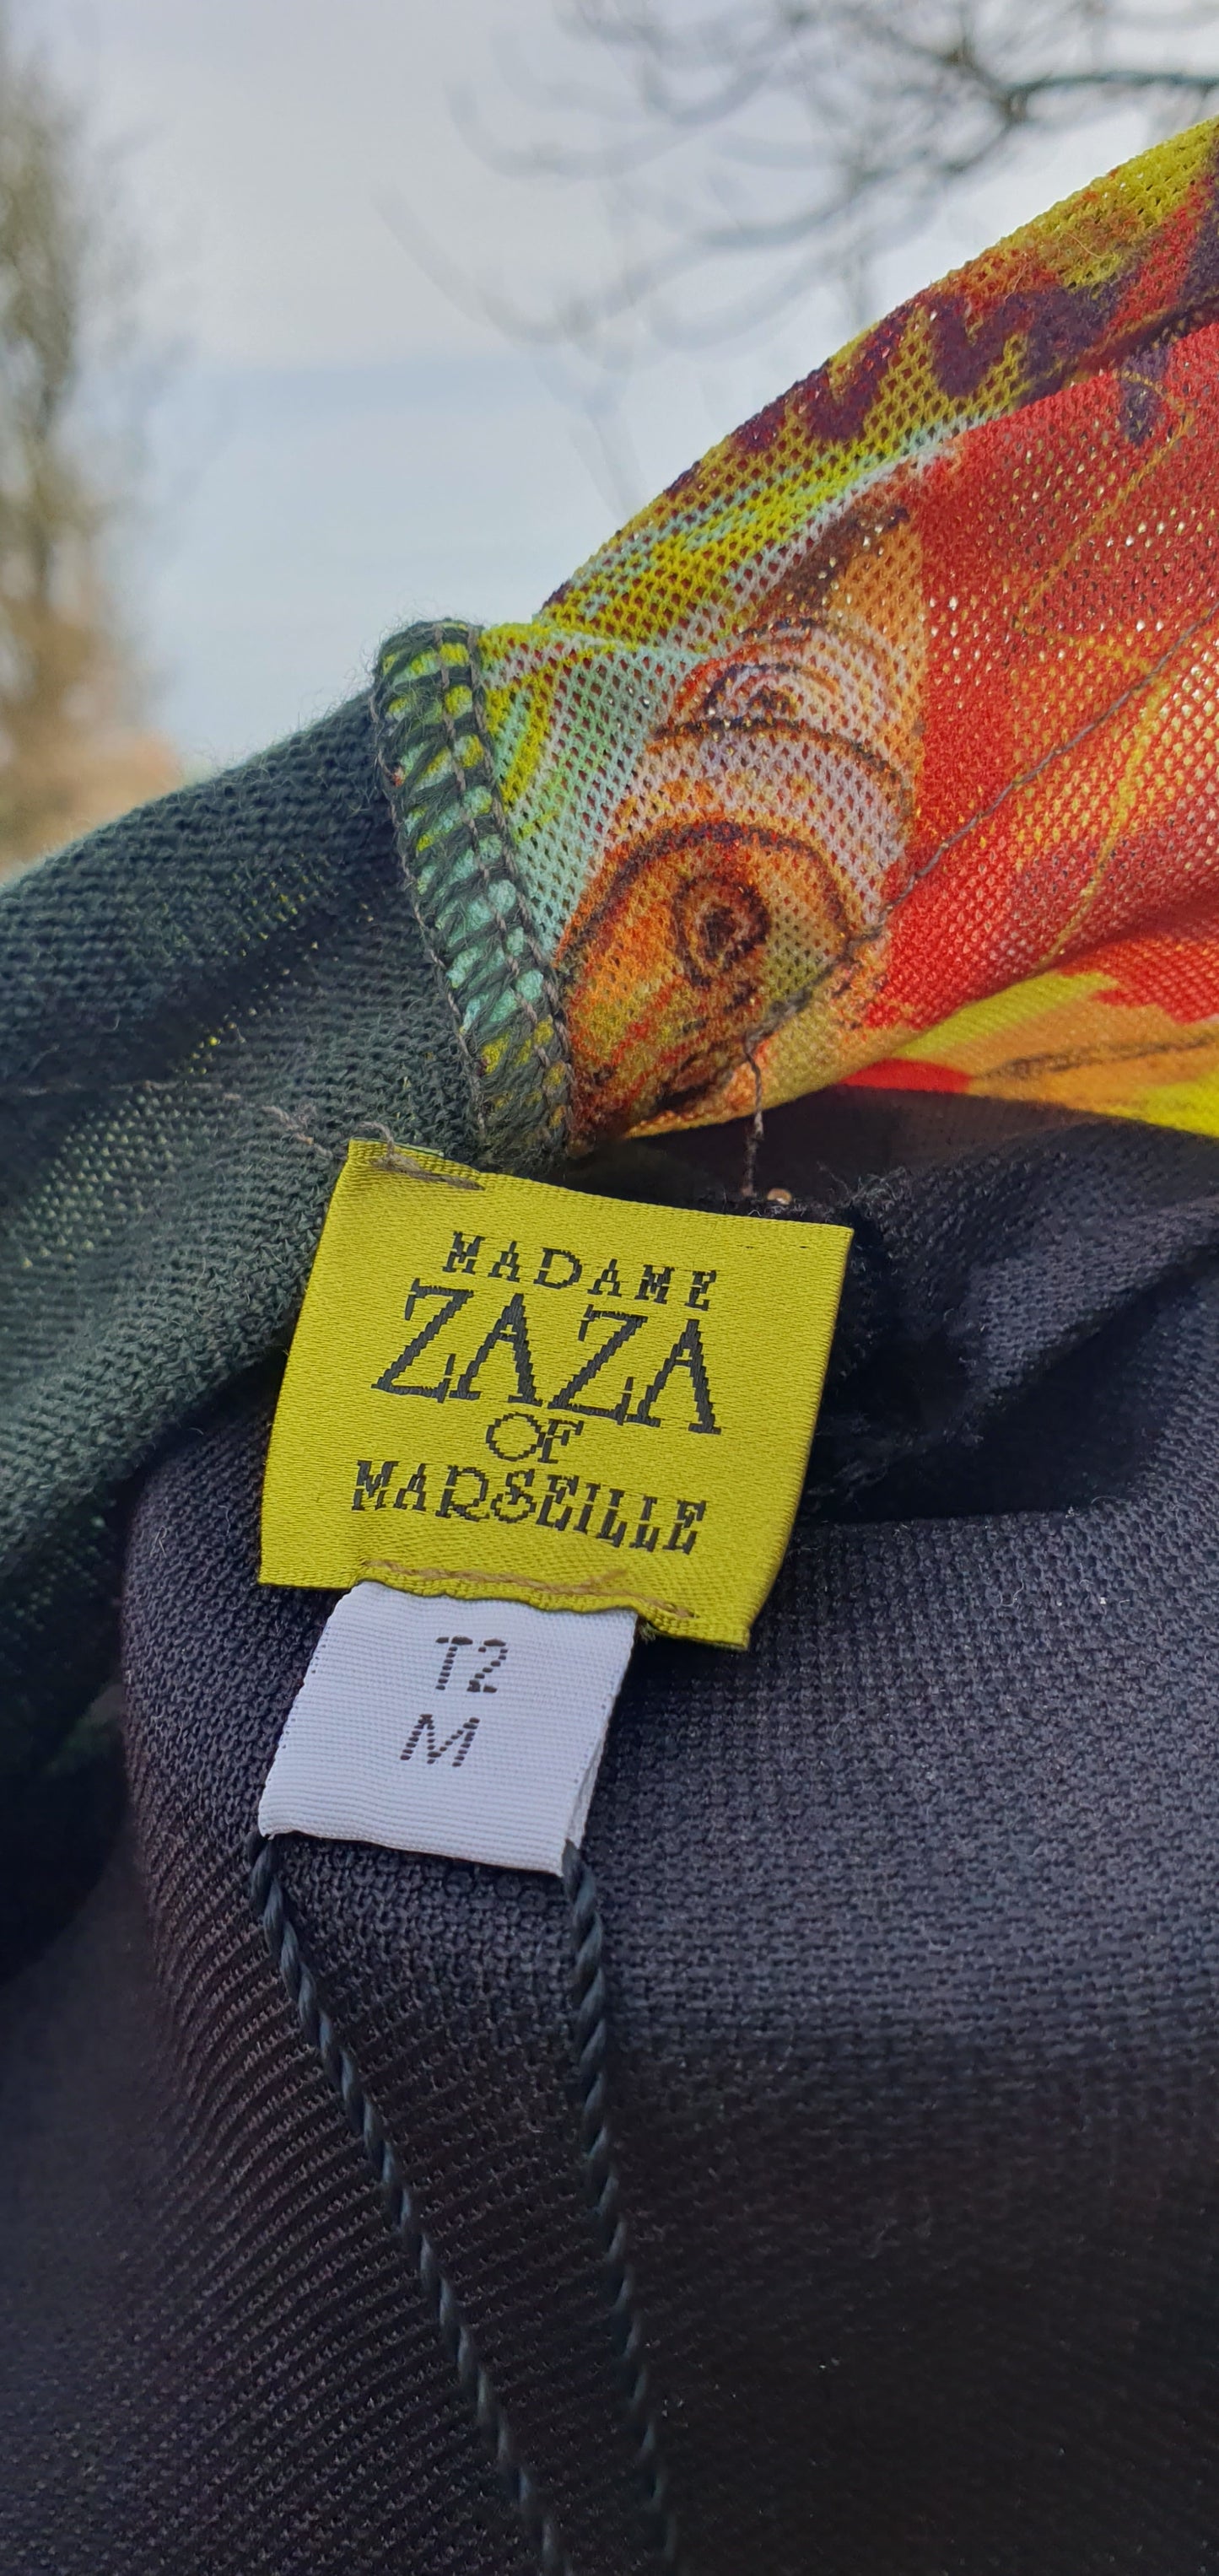 Madame Zara of Marseille size 12